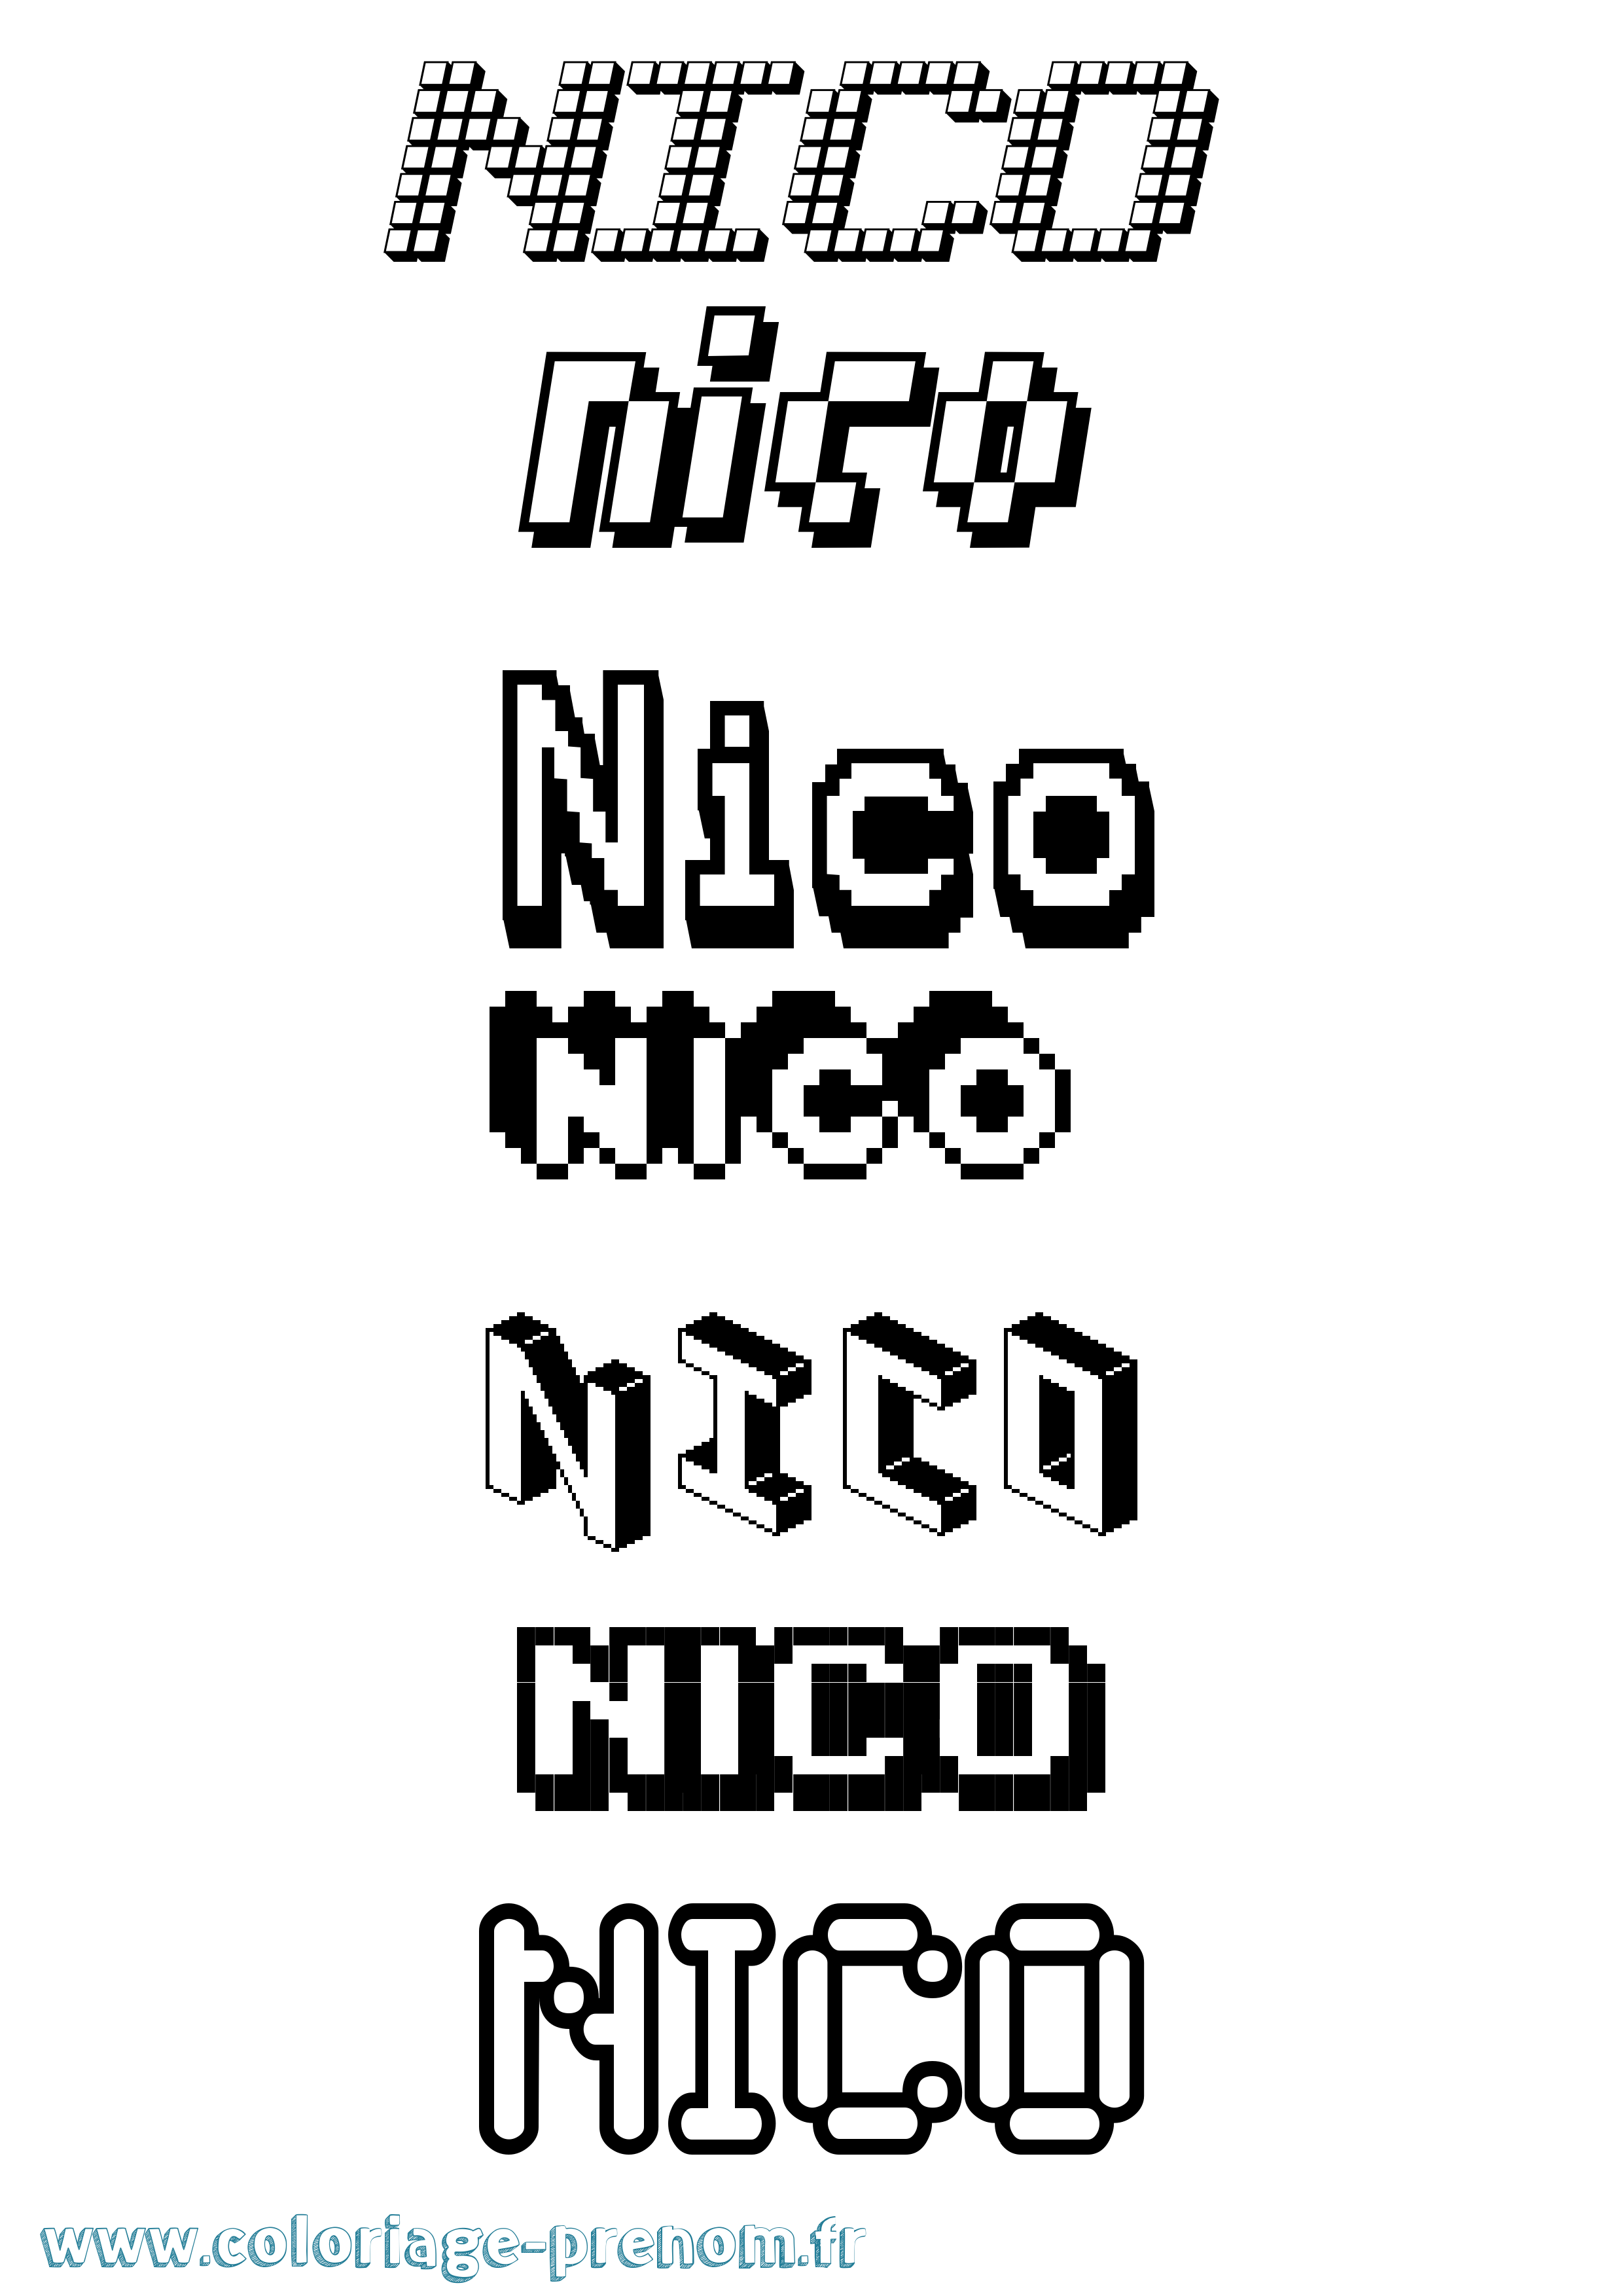 Coloriage prénom Nico Pixel